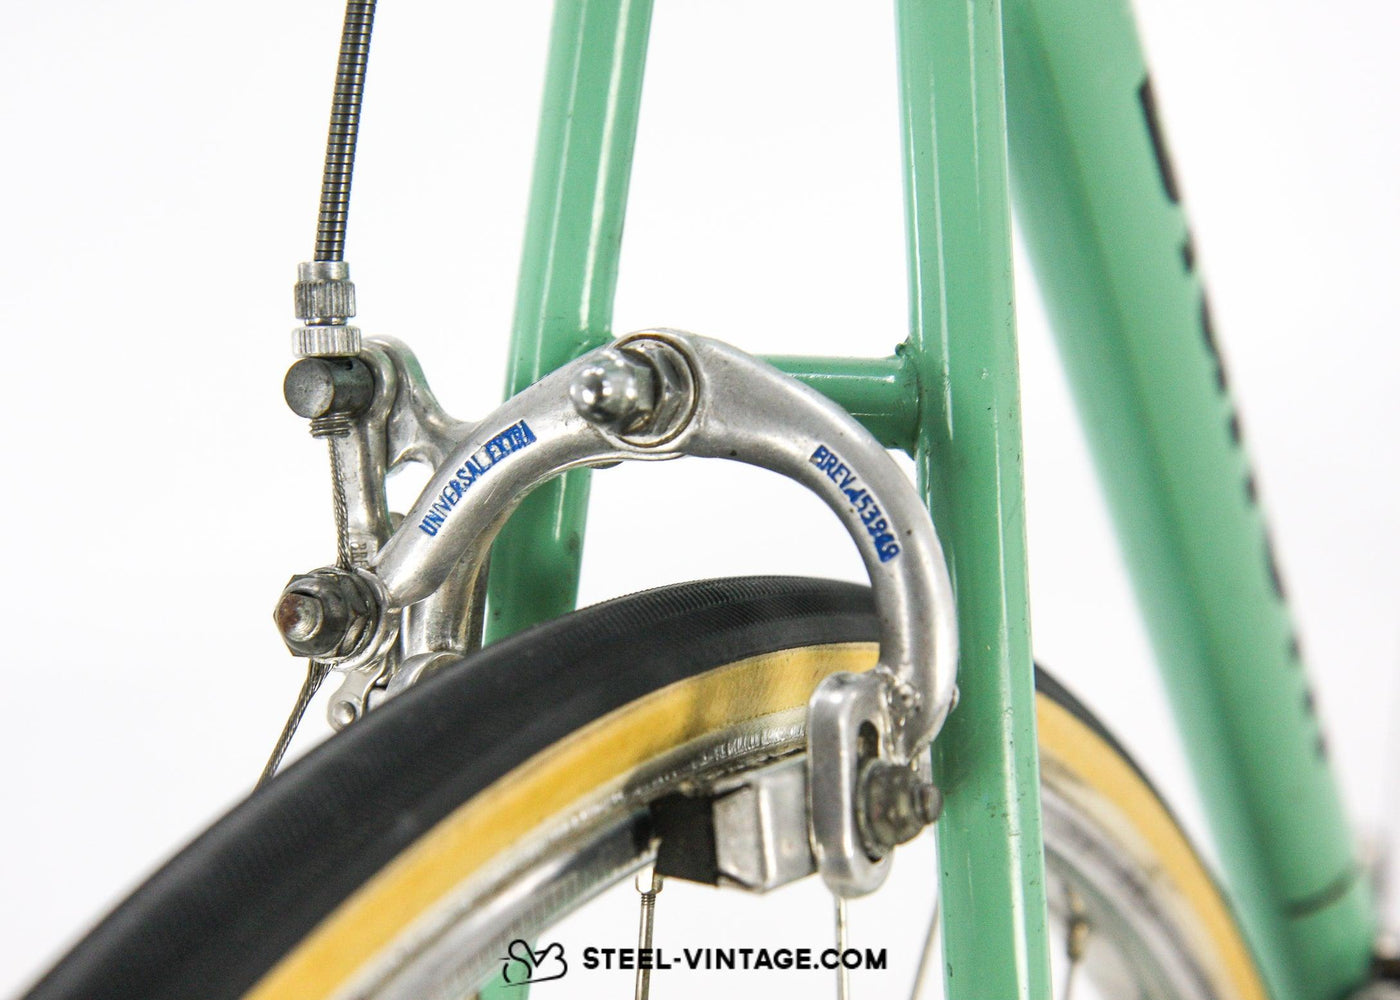 Bianchi Rekord 746 Classic Road Bike 1970s - Steel Vintage Bikes